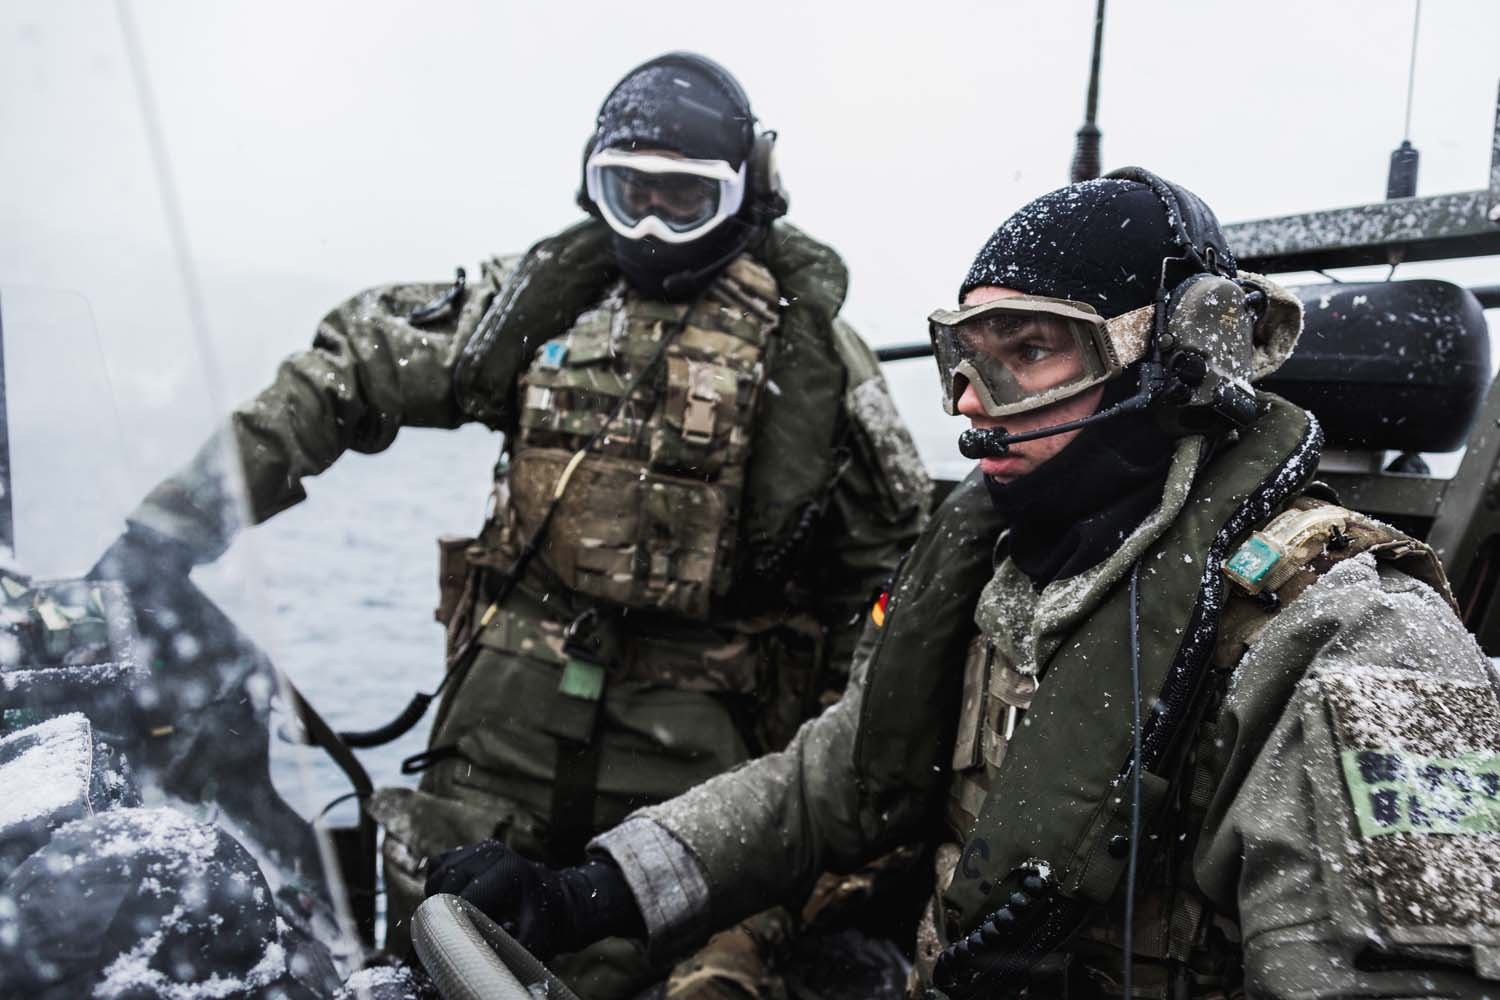 Royal Marines stage high-octane raids| Royal Navy